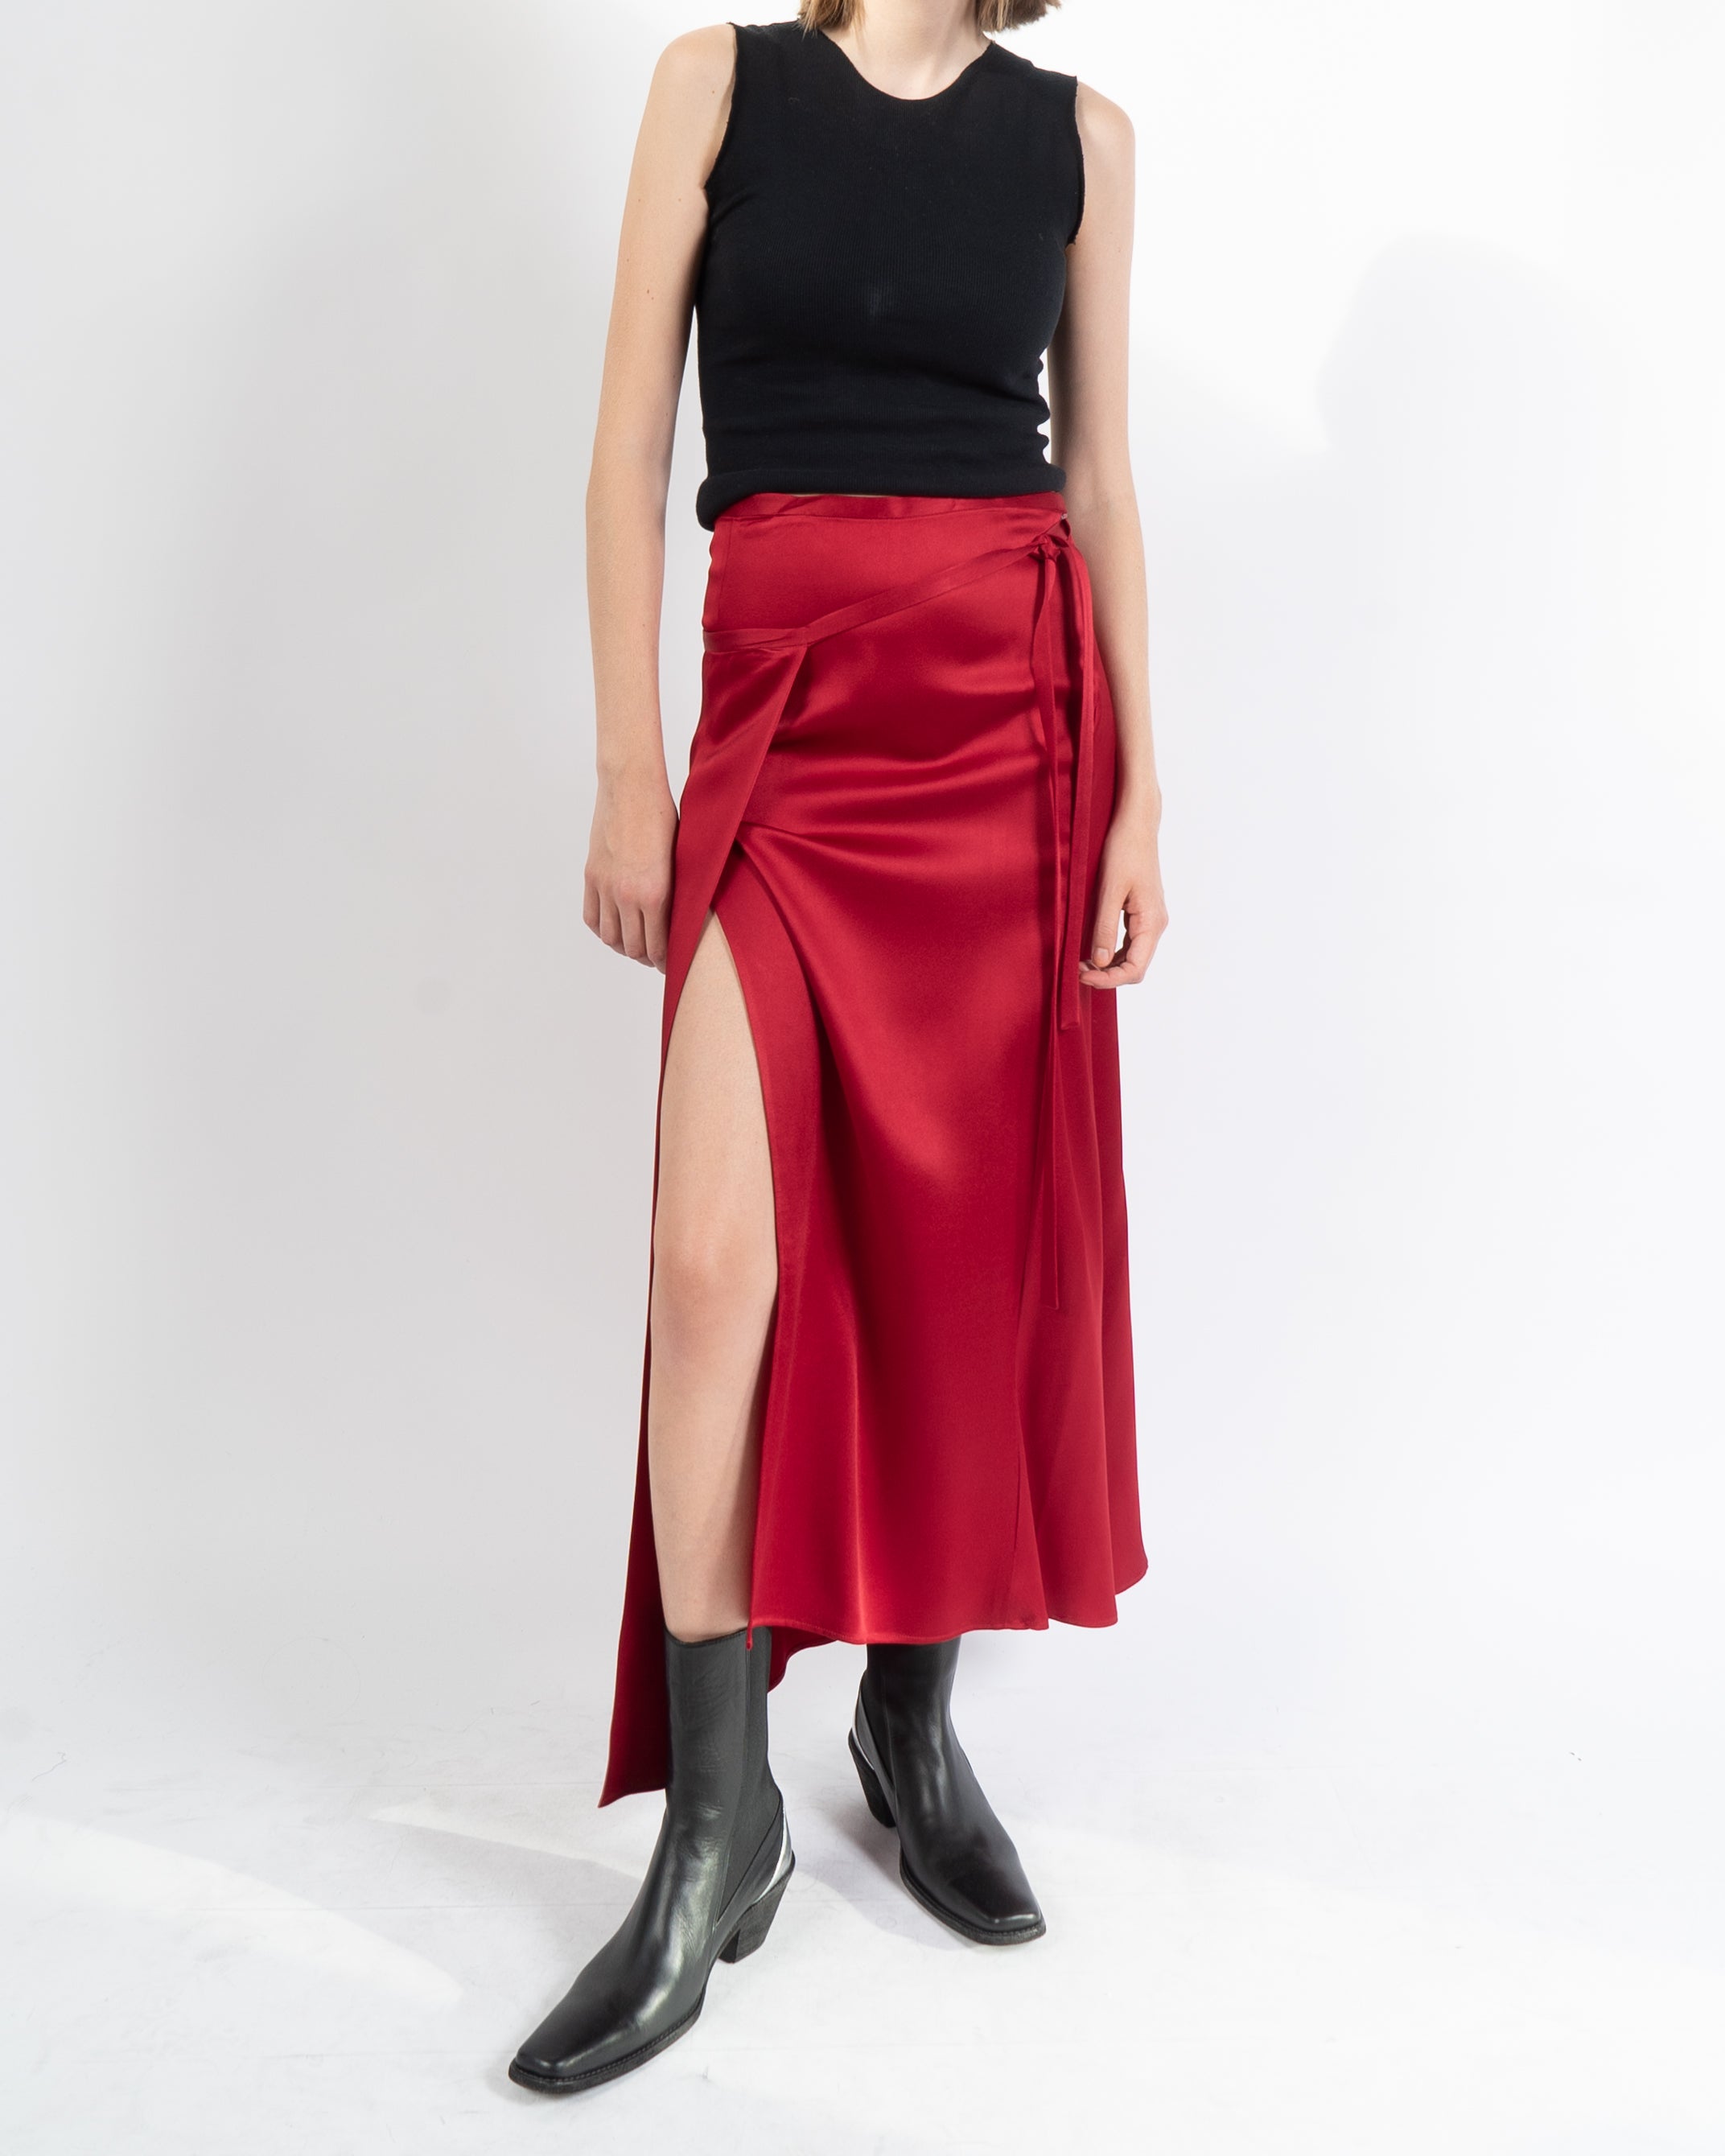 SS18 Red Satin Skirt